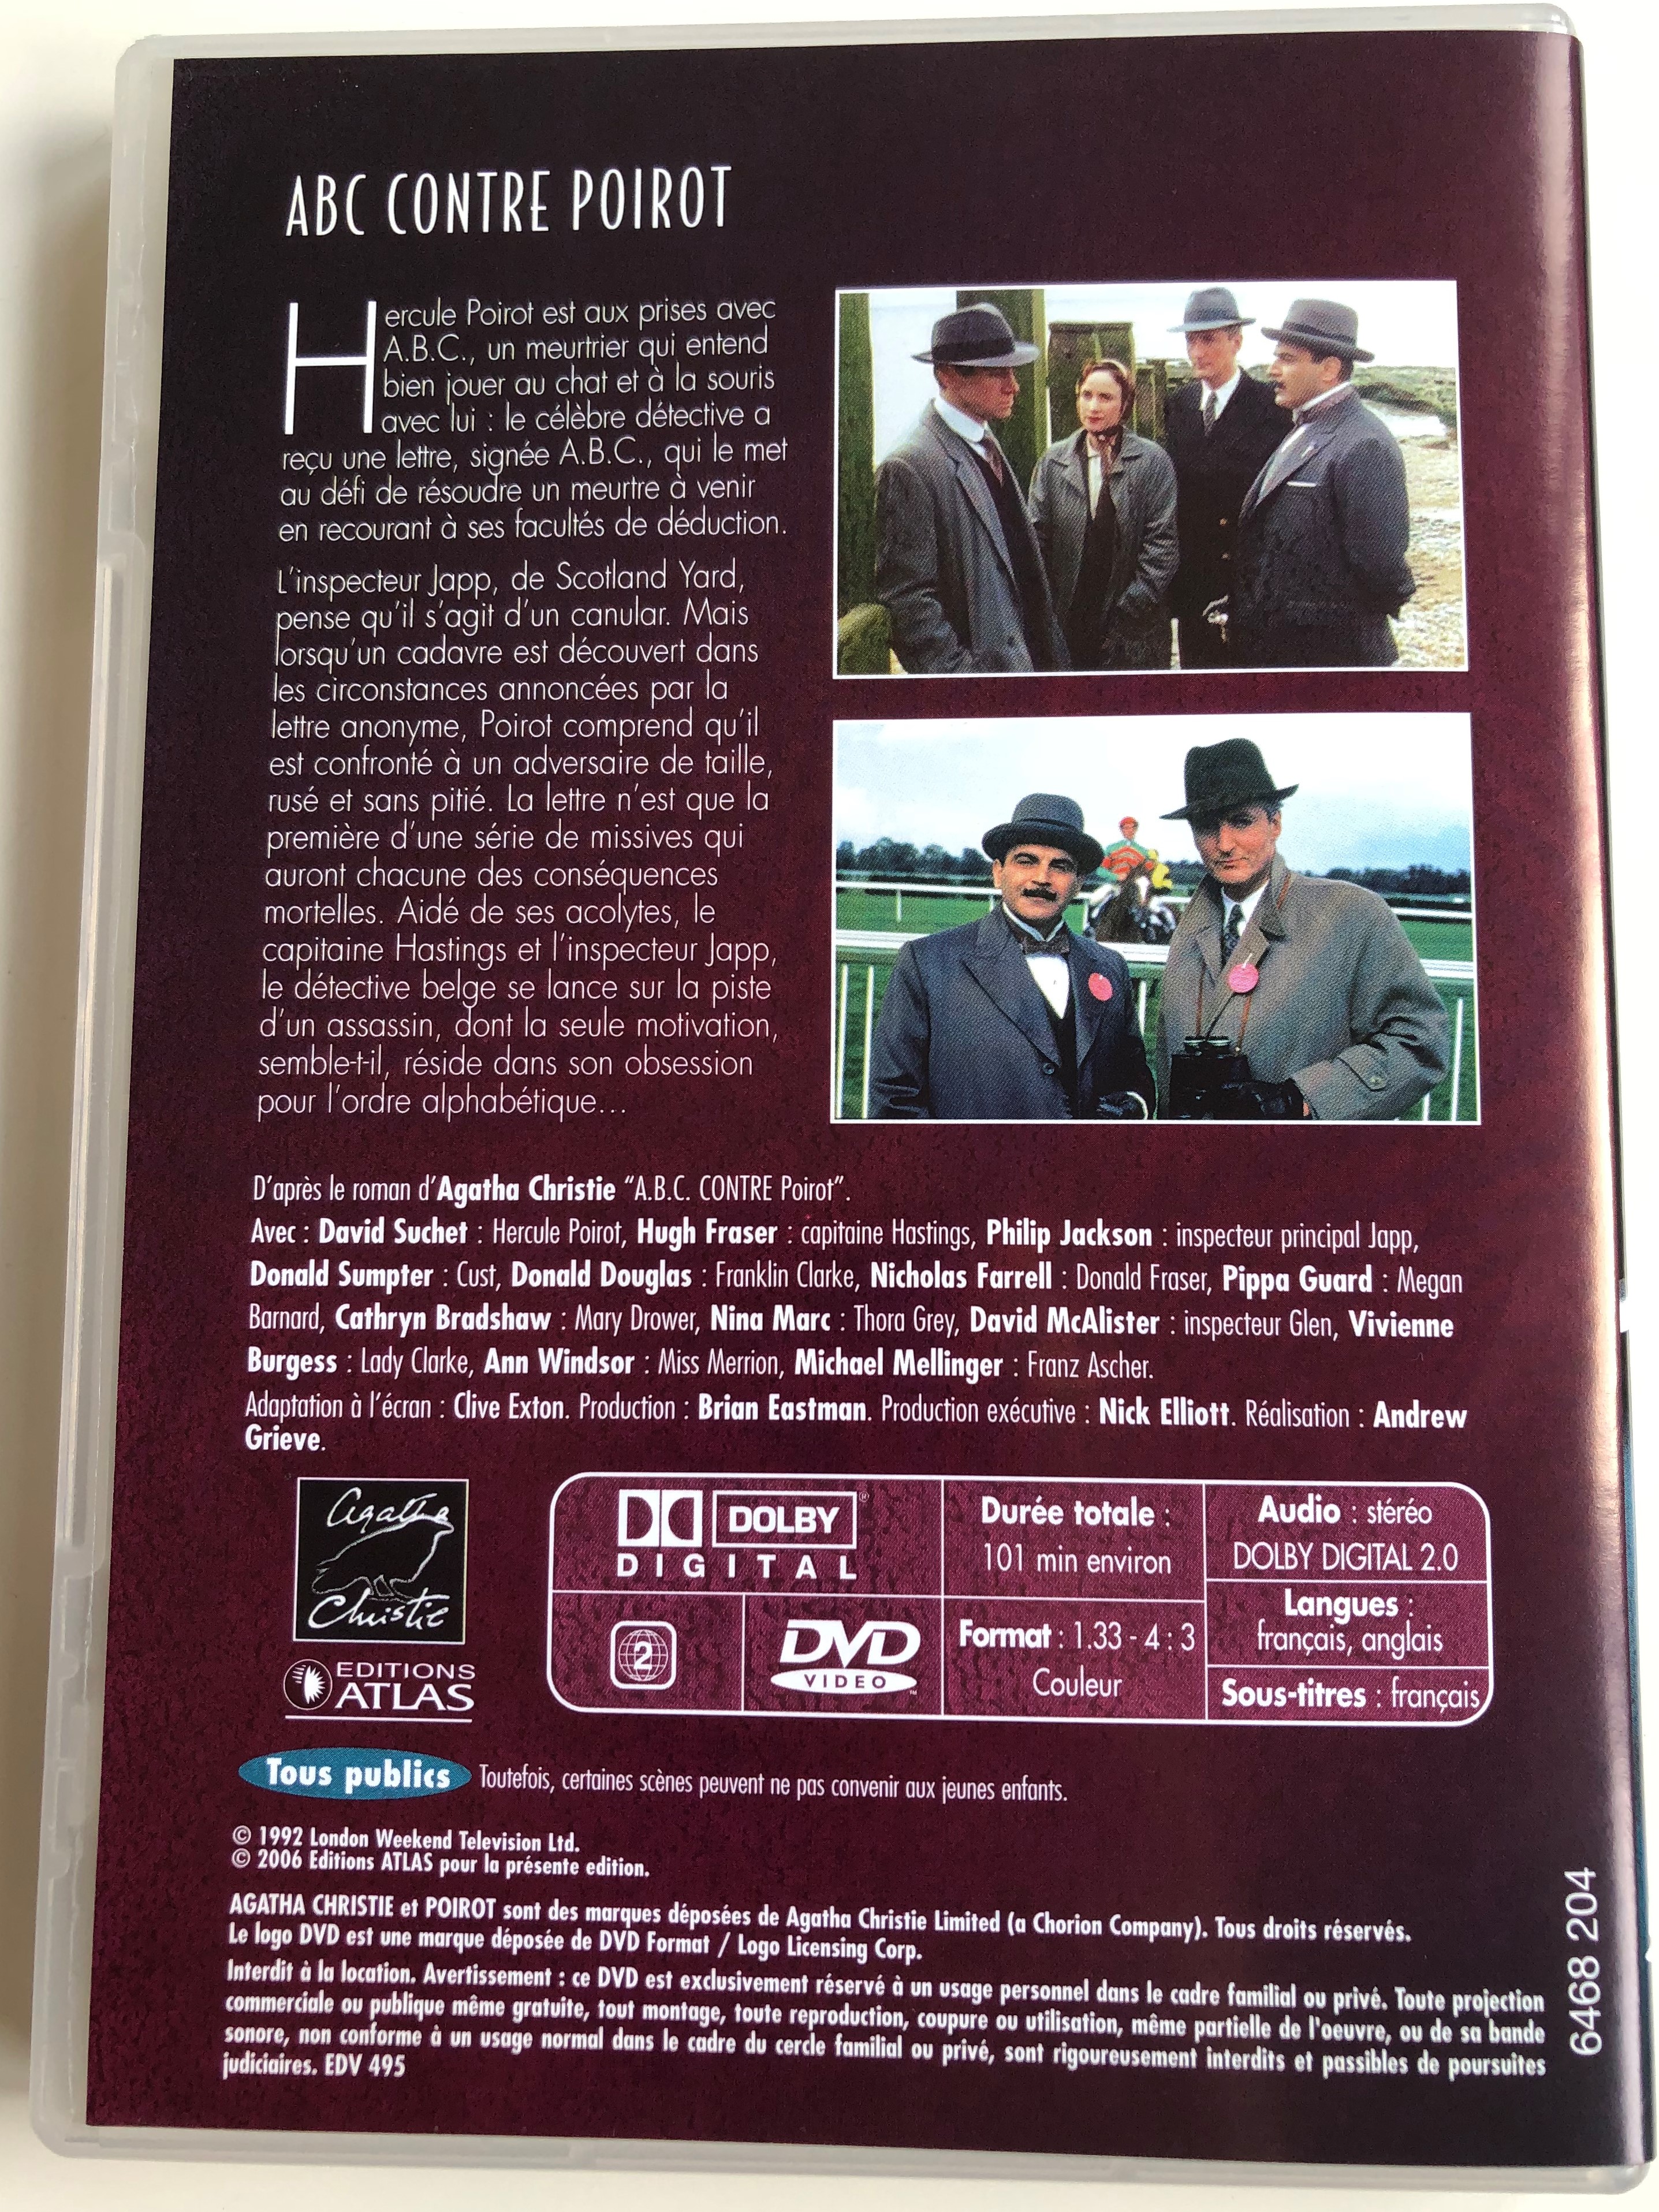 Agatha Christie - Poirot DVD 1992 La Collection A.B.C Contre Poirot /  Directed by Andrew Grieve / Starring: David Suchet, Hugh Fraser, Philip  Jackson - bibleinmylanguage